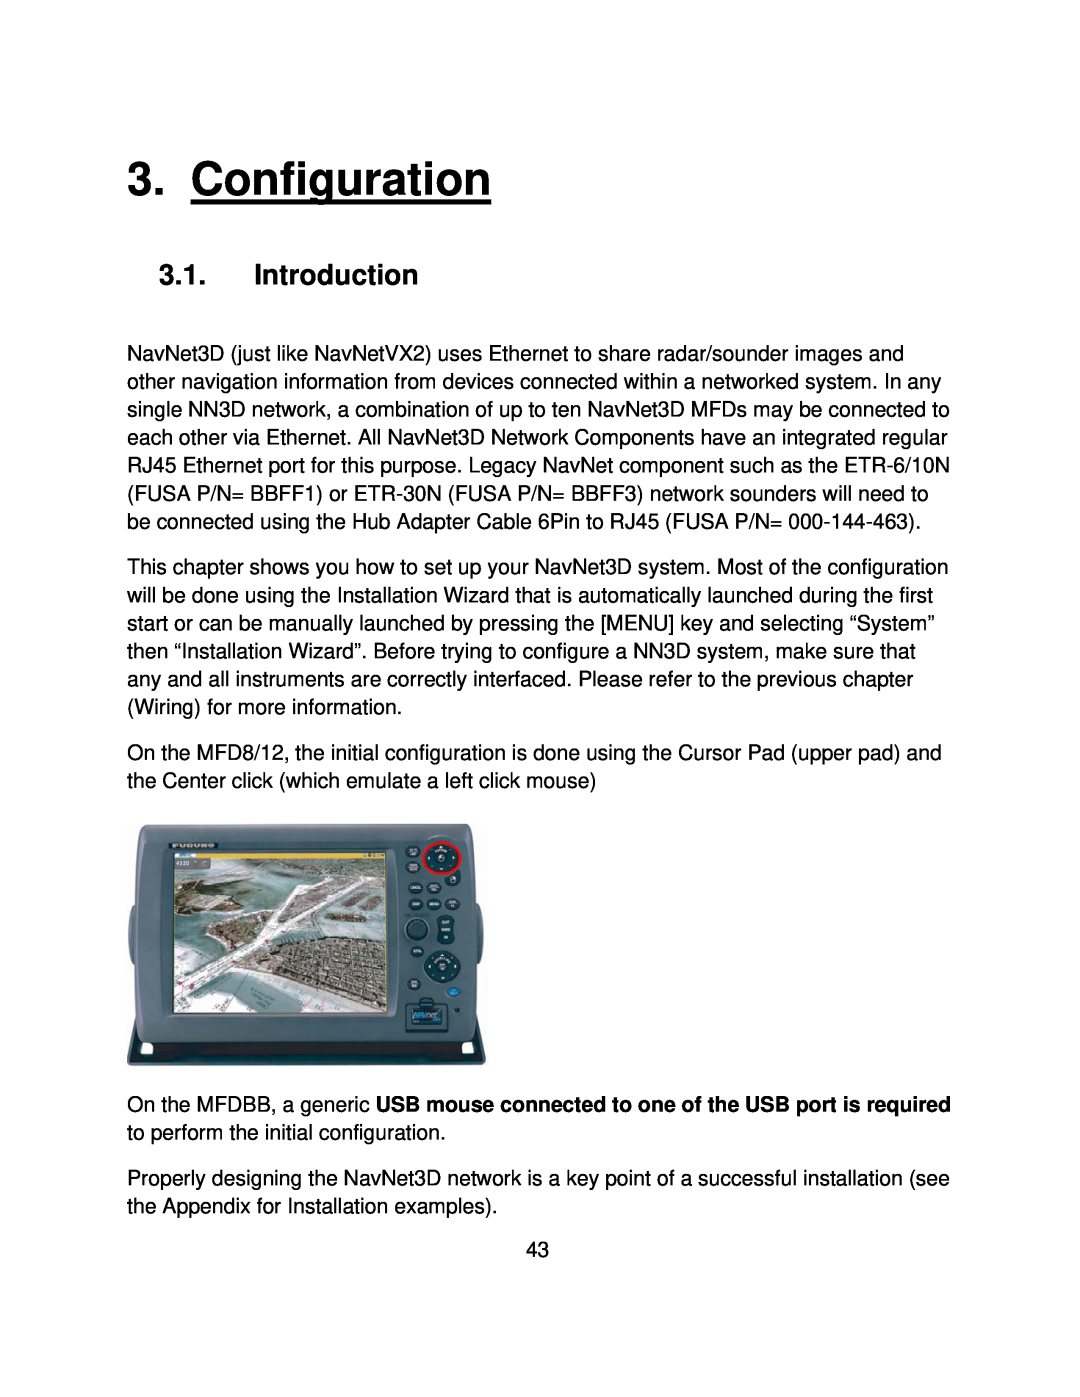 Furuno MFD8/12/BB manual Configuration, Introduction 